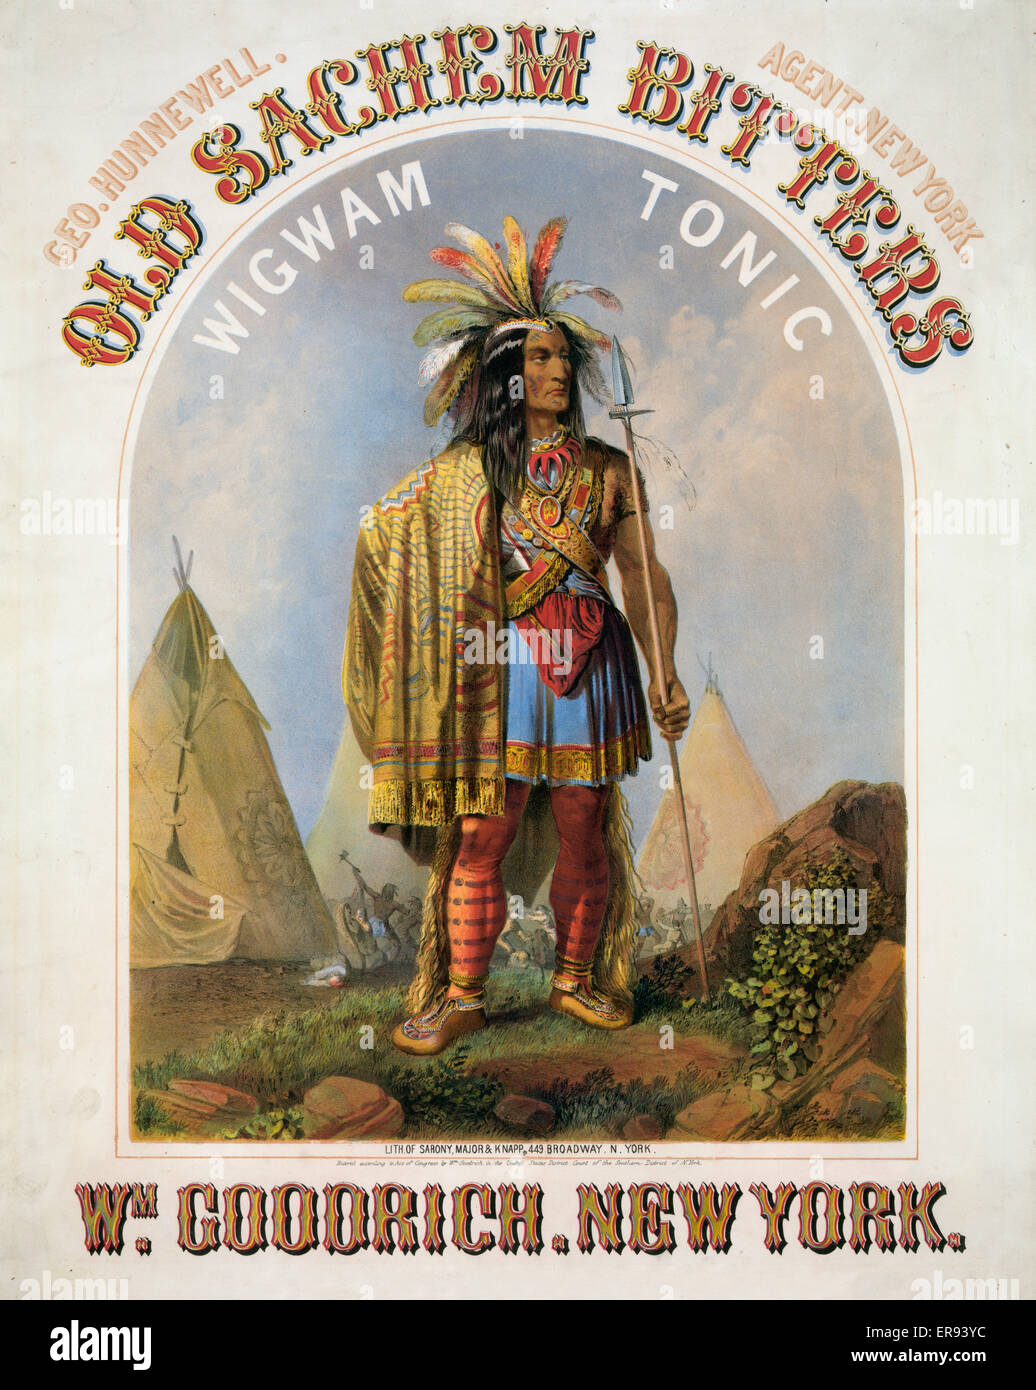 Old Sachem bitters - wigwam tonic - Wm. Goodrich, New York G Stock Photo